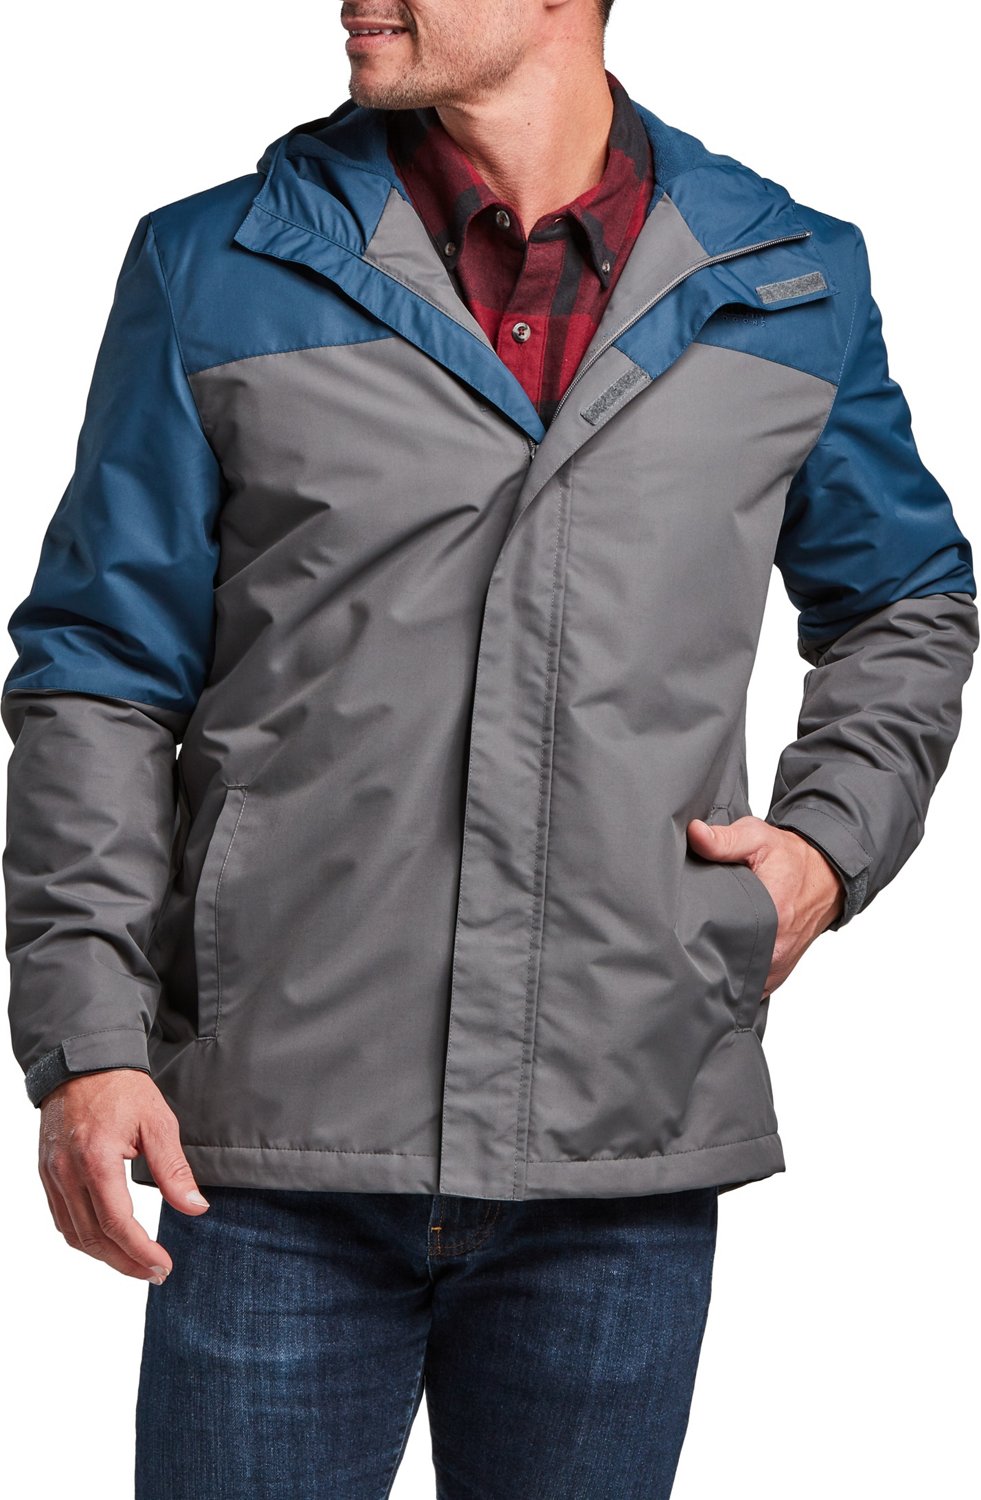 magellan outdoors men's jacket